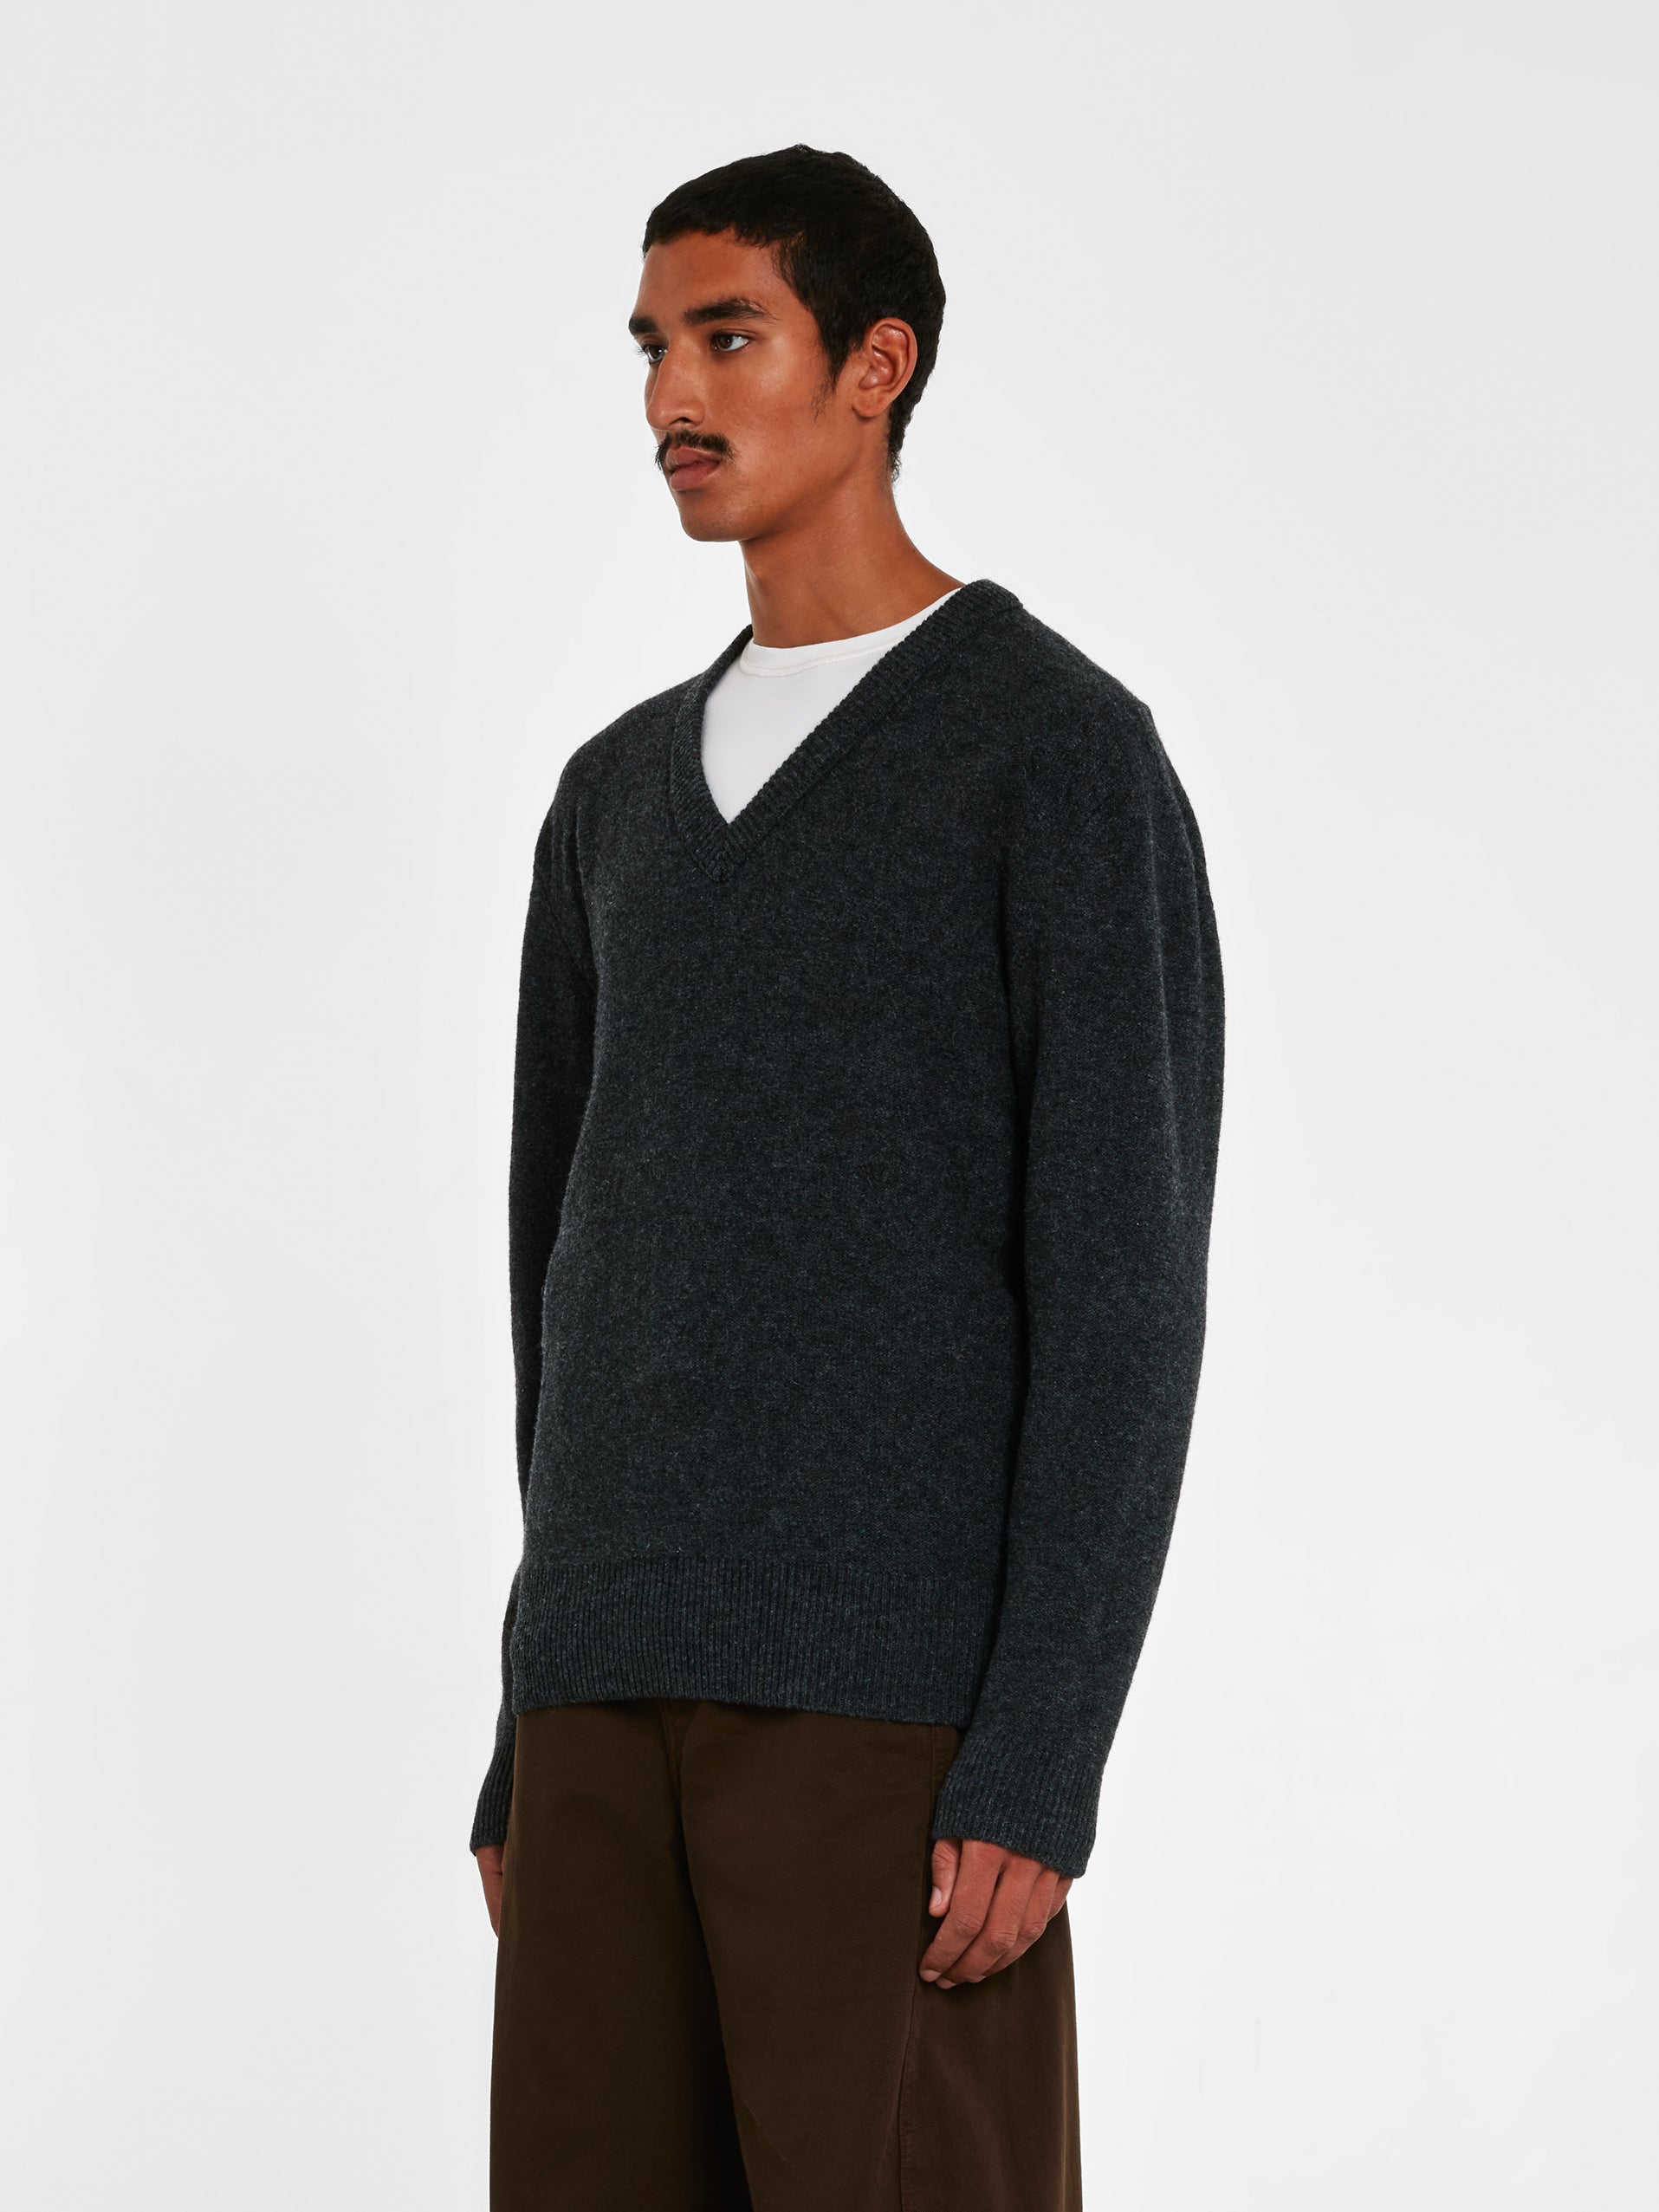 Lemaire - Men’s V-Neck Sweater - (Black) view 2